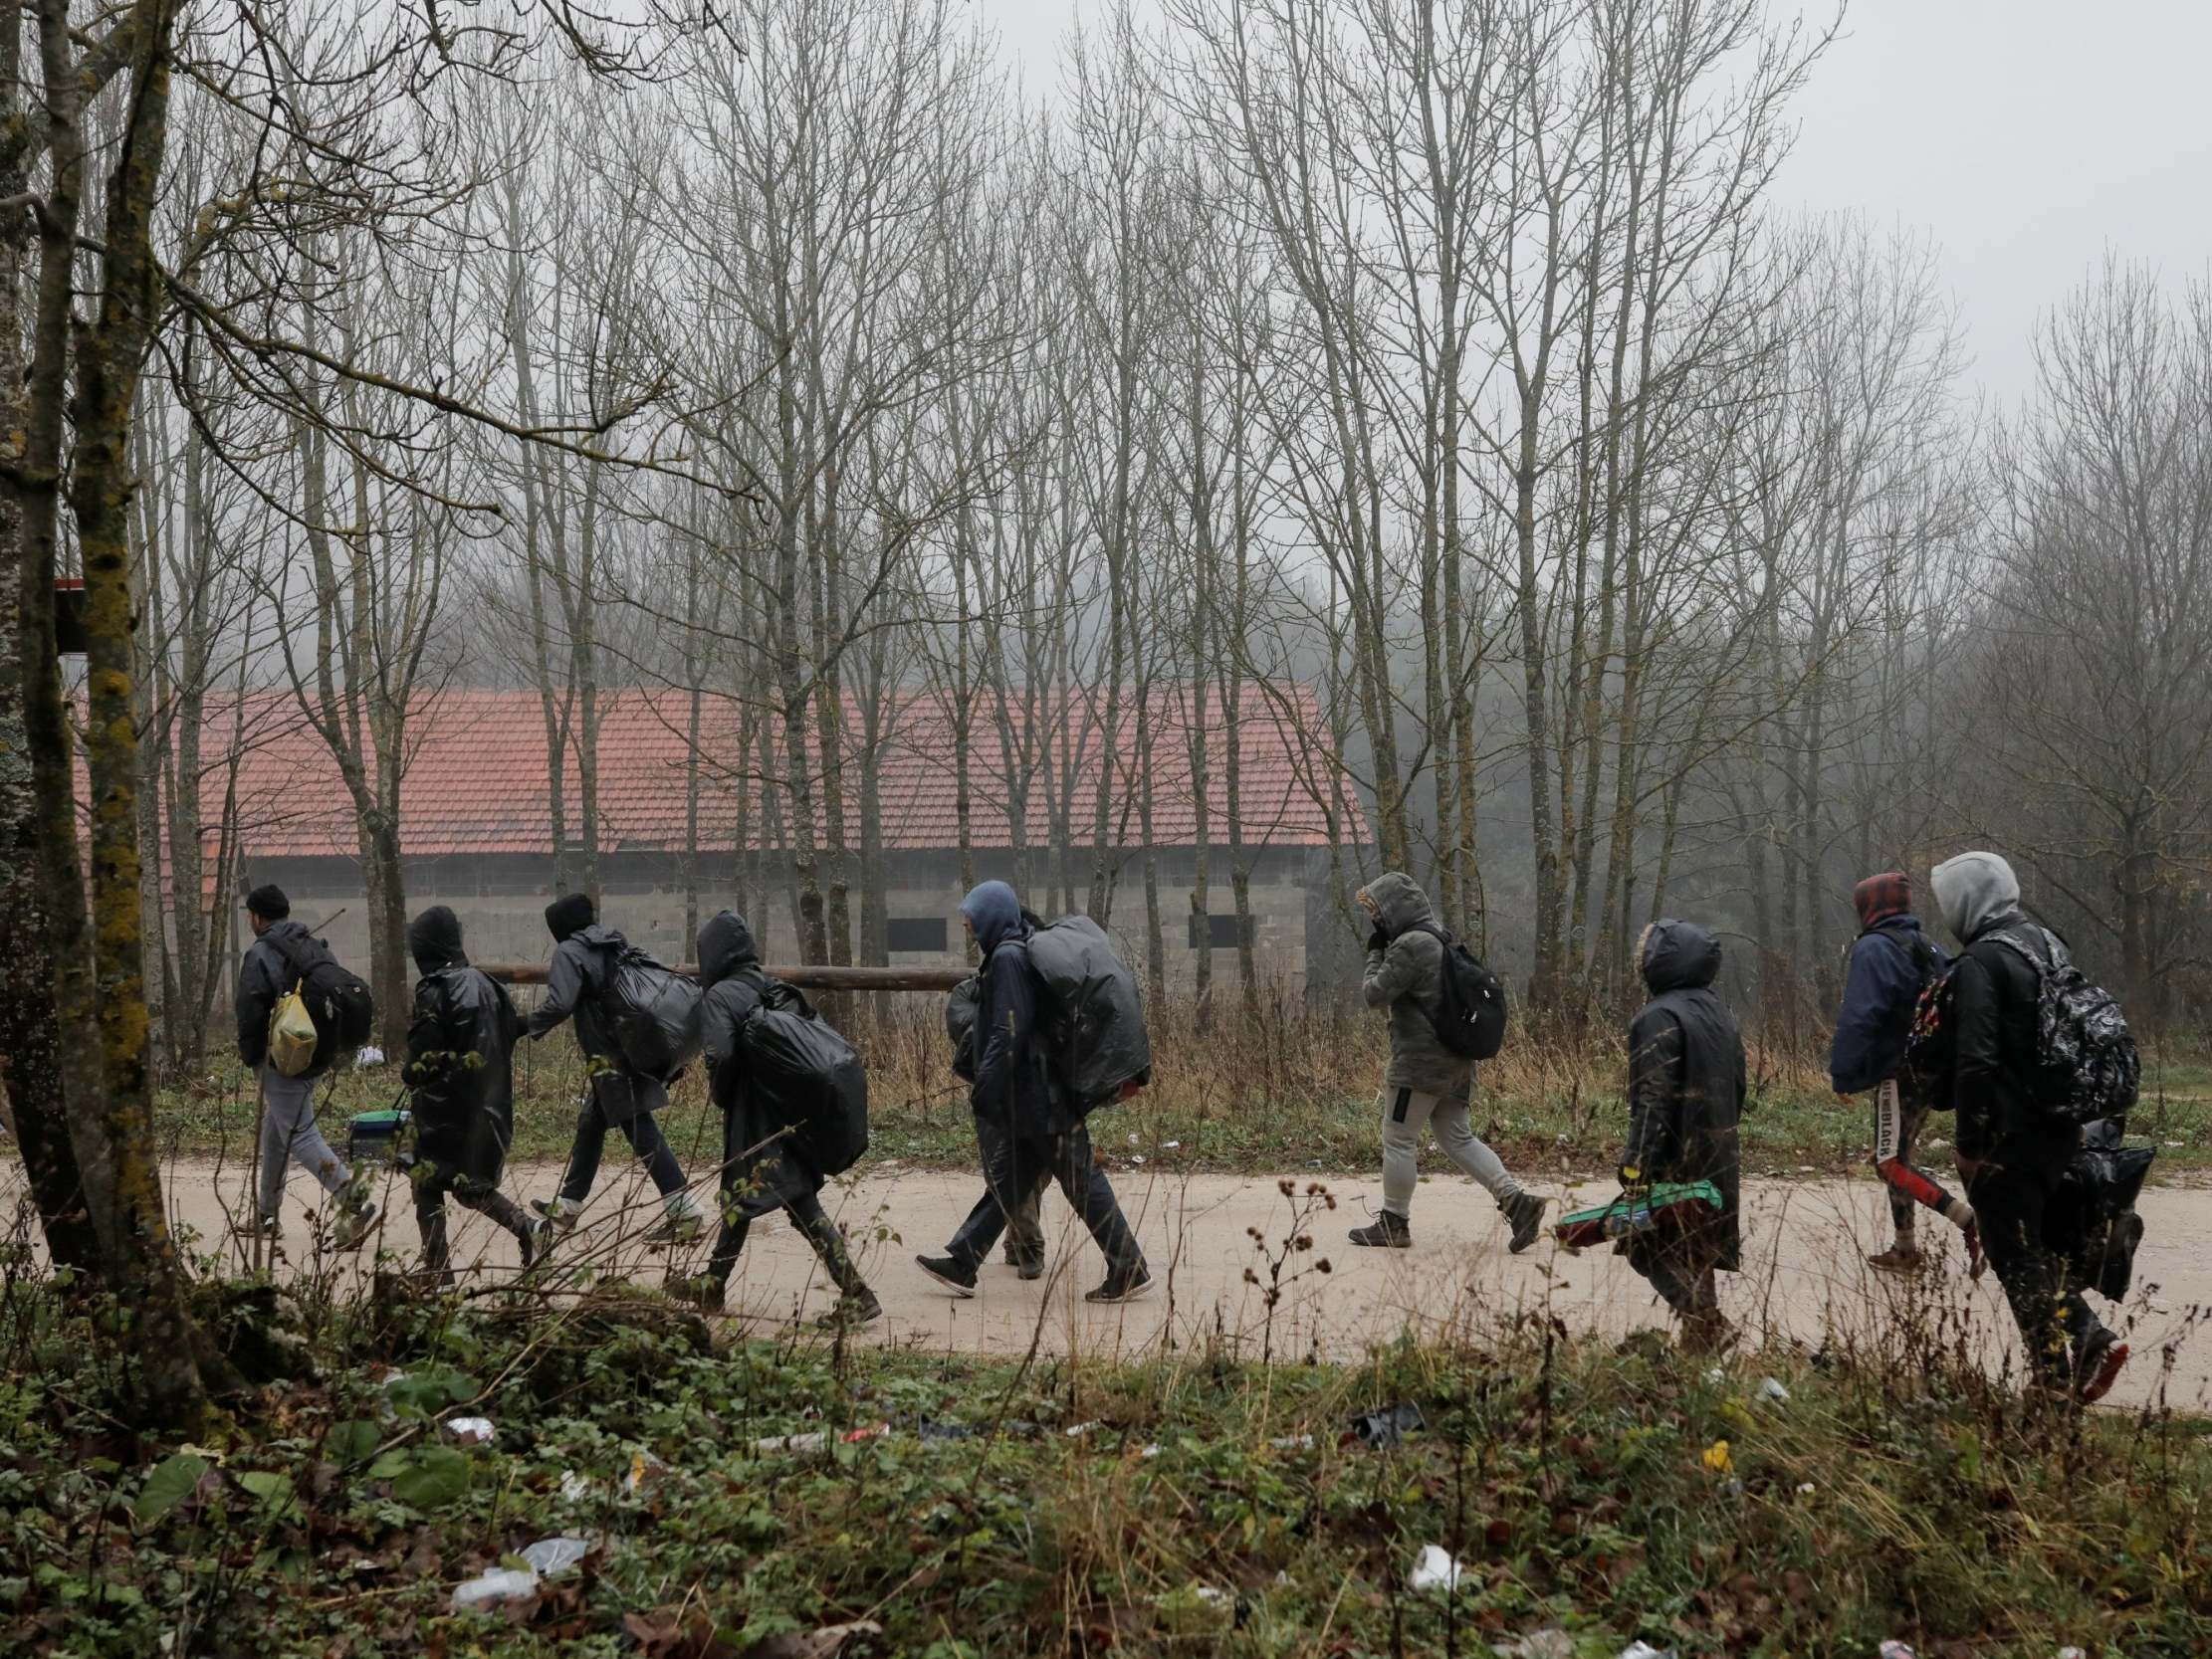 Migrants walk through the woods near Bihac in Bosnia before trying to cross the border into Croatia